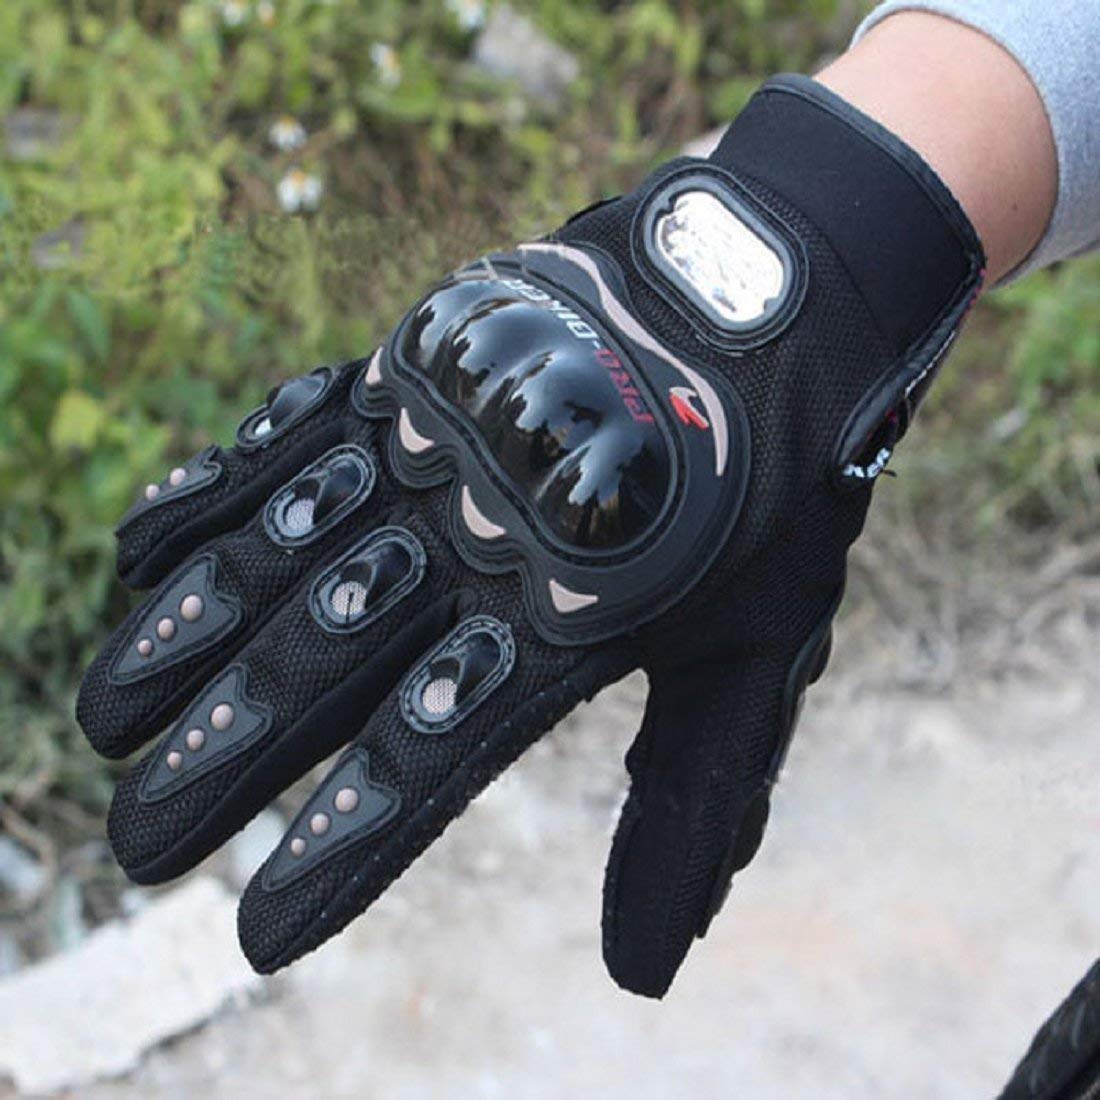 Pro-Biker Powersports Riding Gloves Touch Original